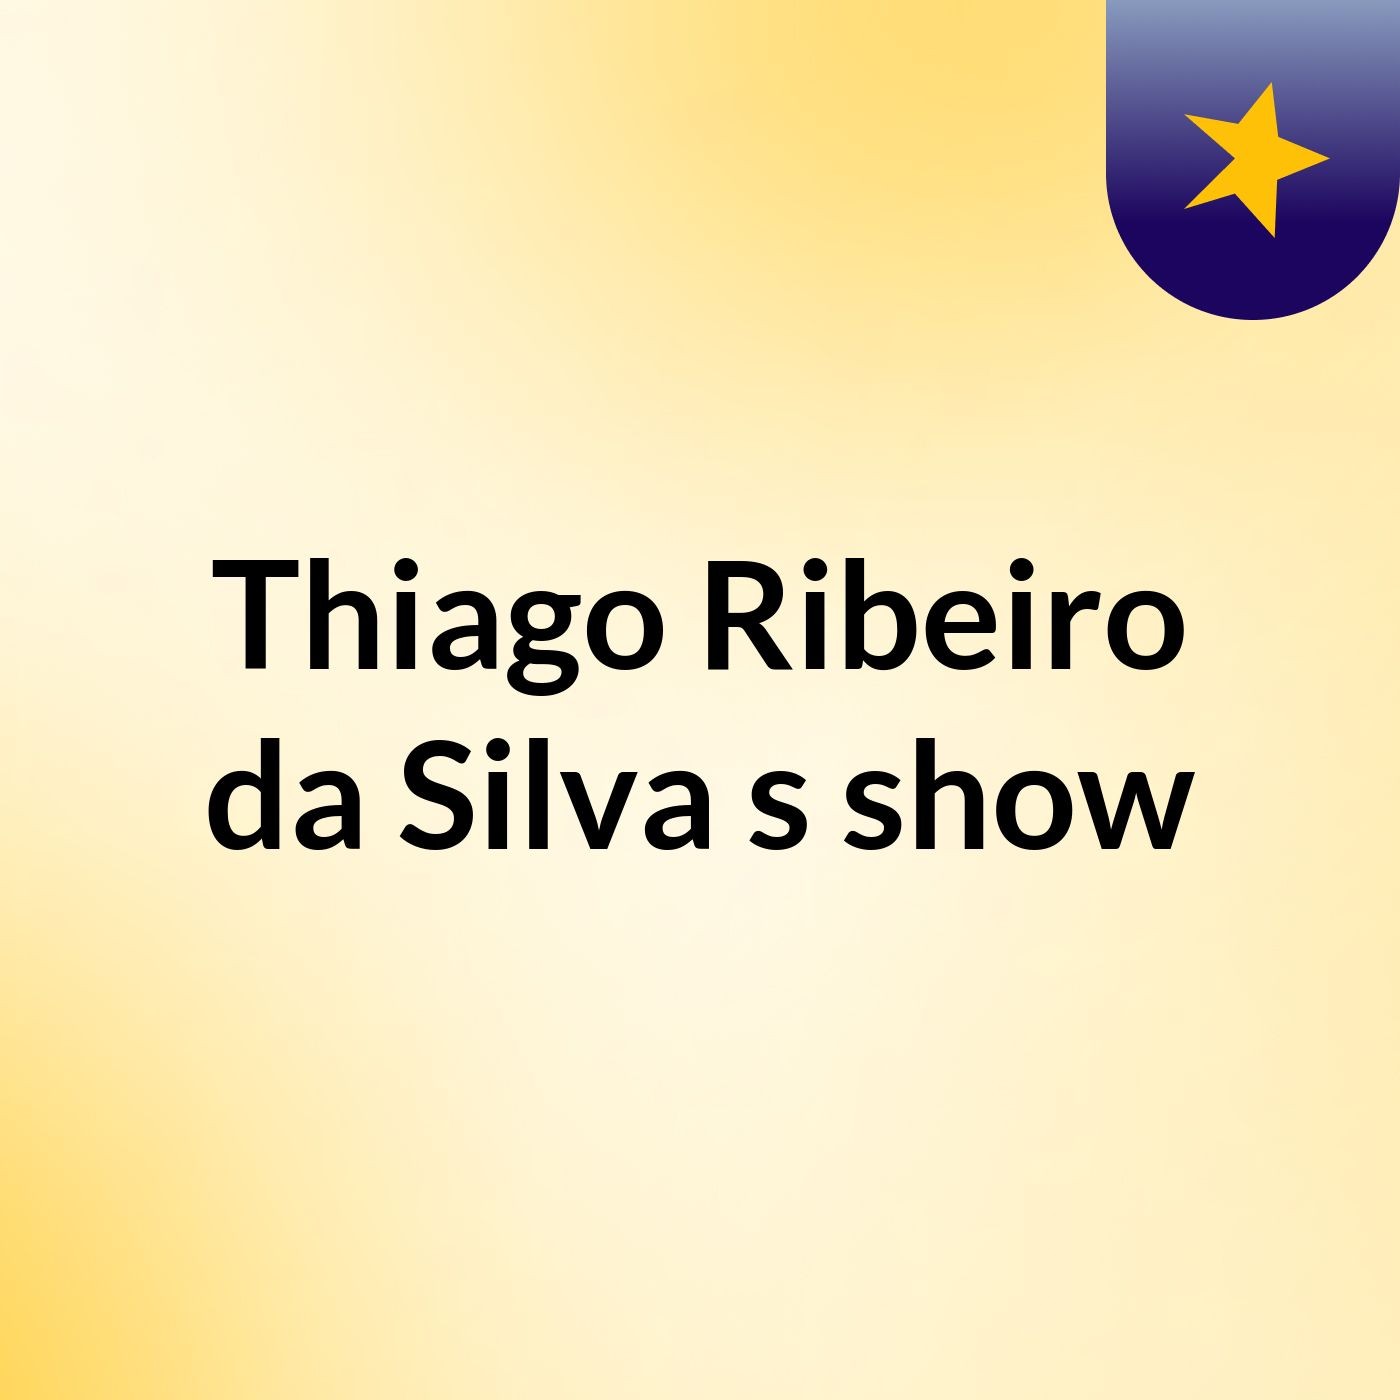 Thiago Ribeiro da Silva's show